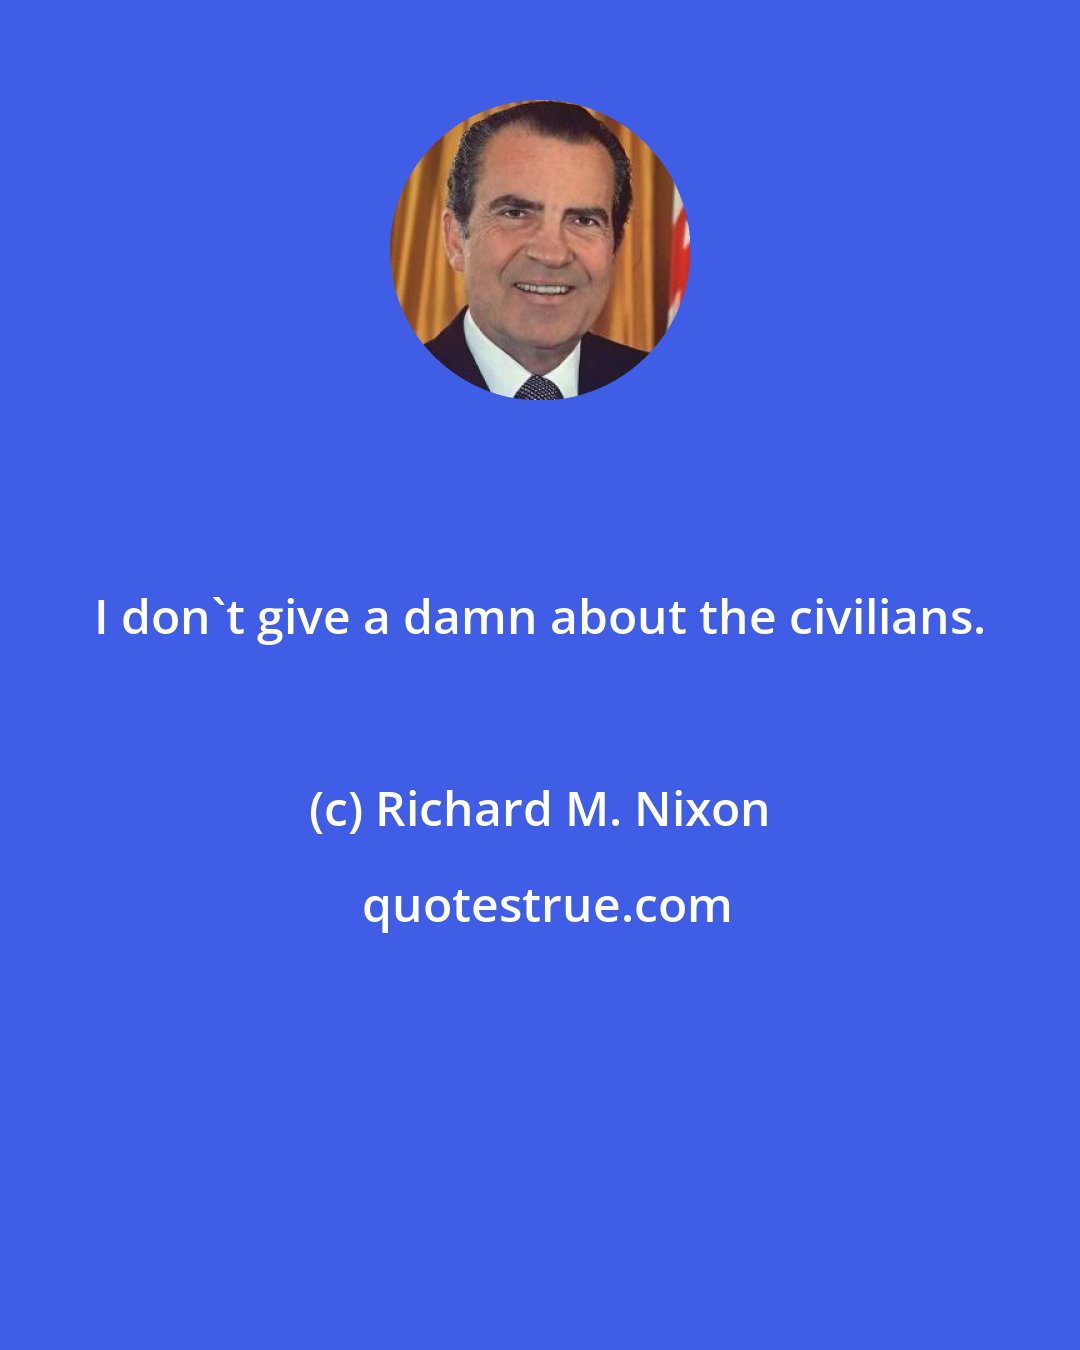 Richard M. Nixon: I don't give a damn about the civilians.